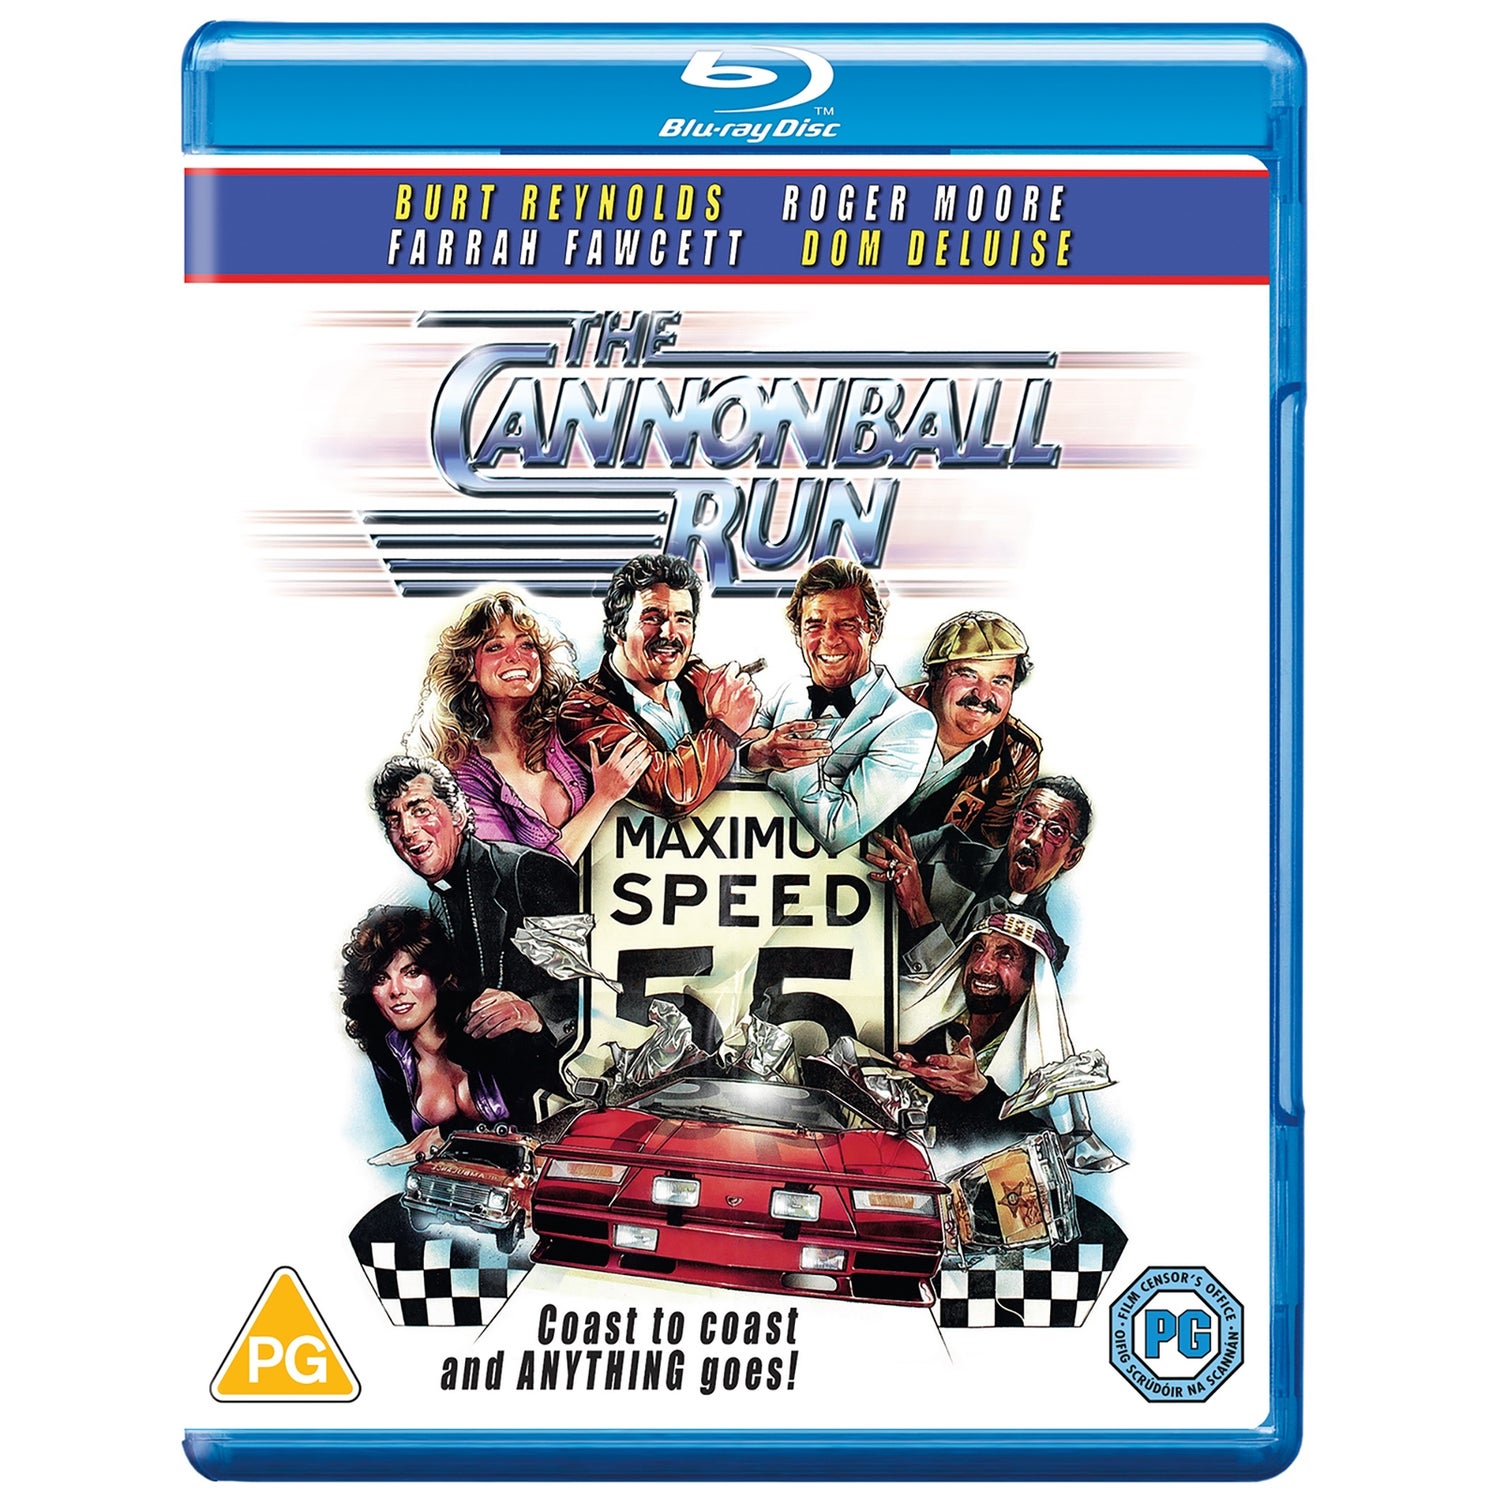 Cannonball Run Blu-Ray